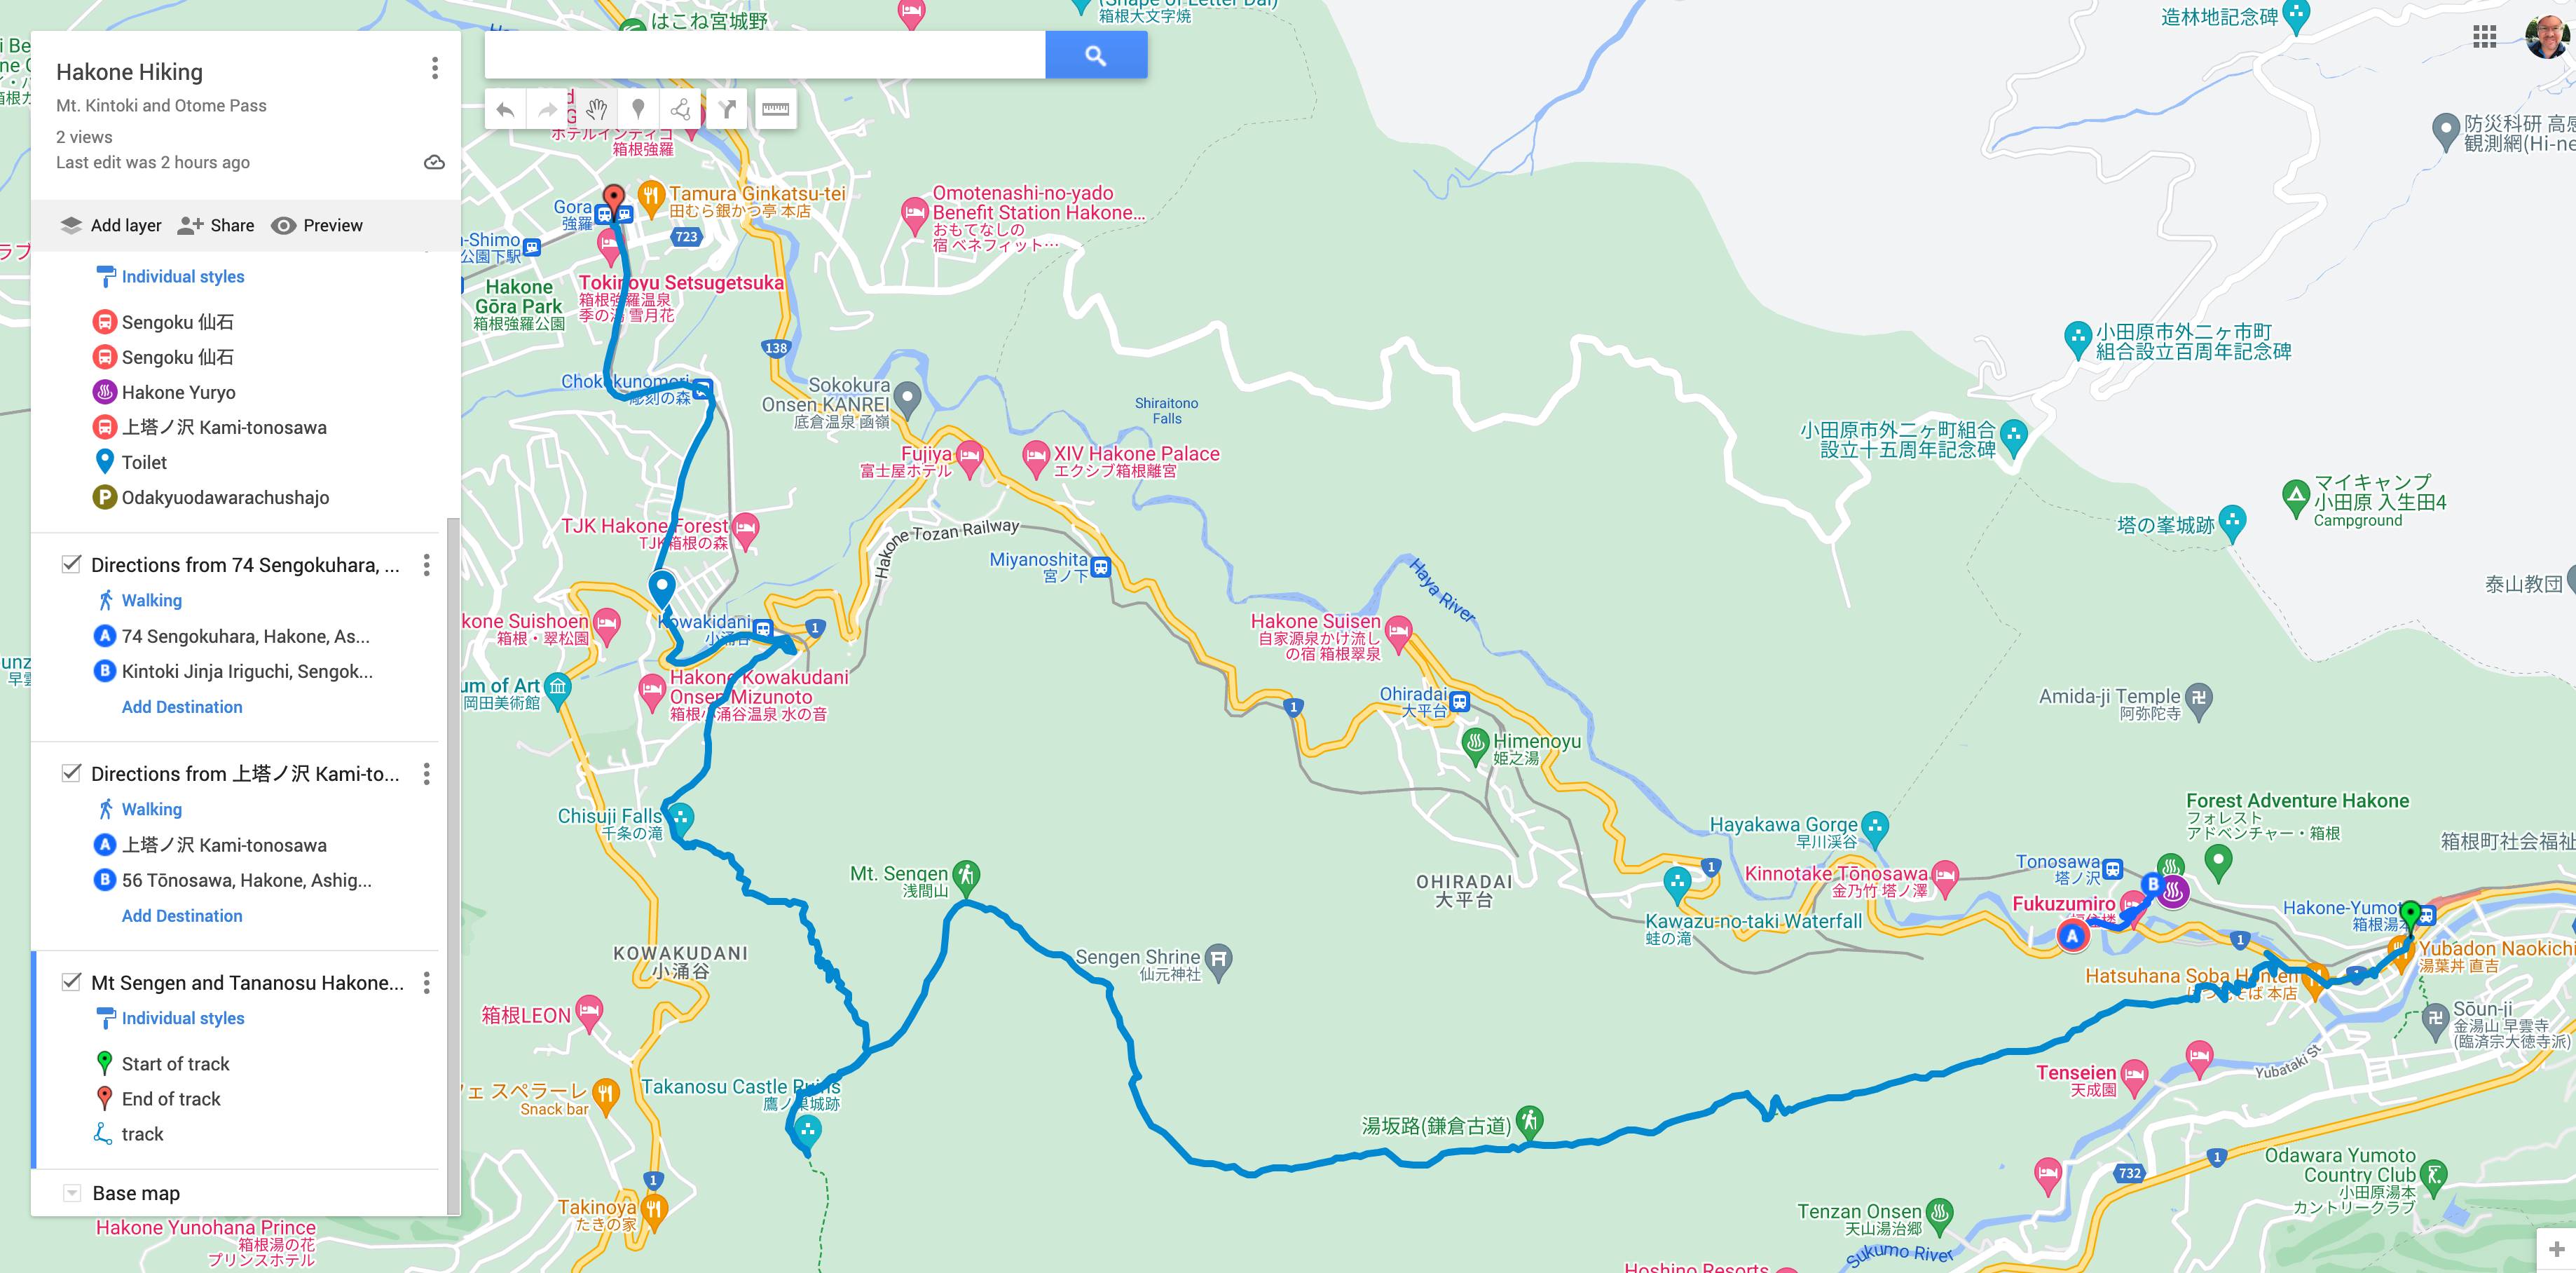 Mts Sengen and Takanosu to Chisuji Falls then Gora - Hiking in Hakone